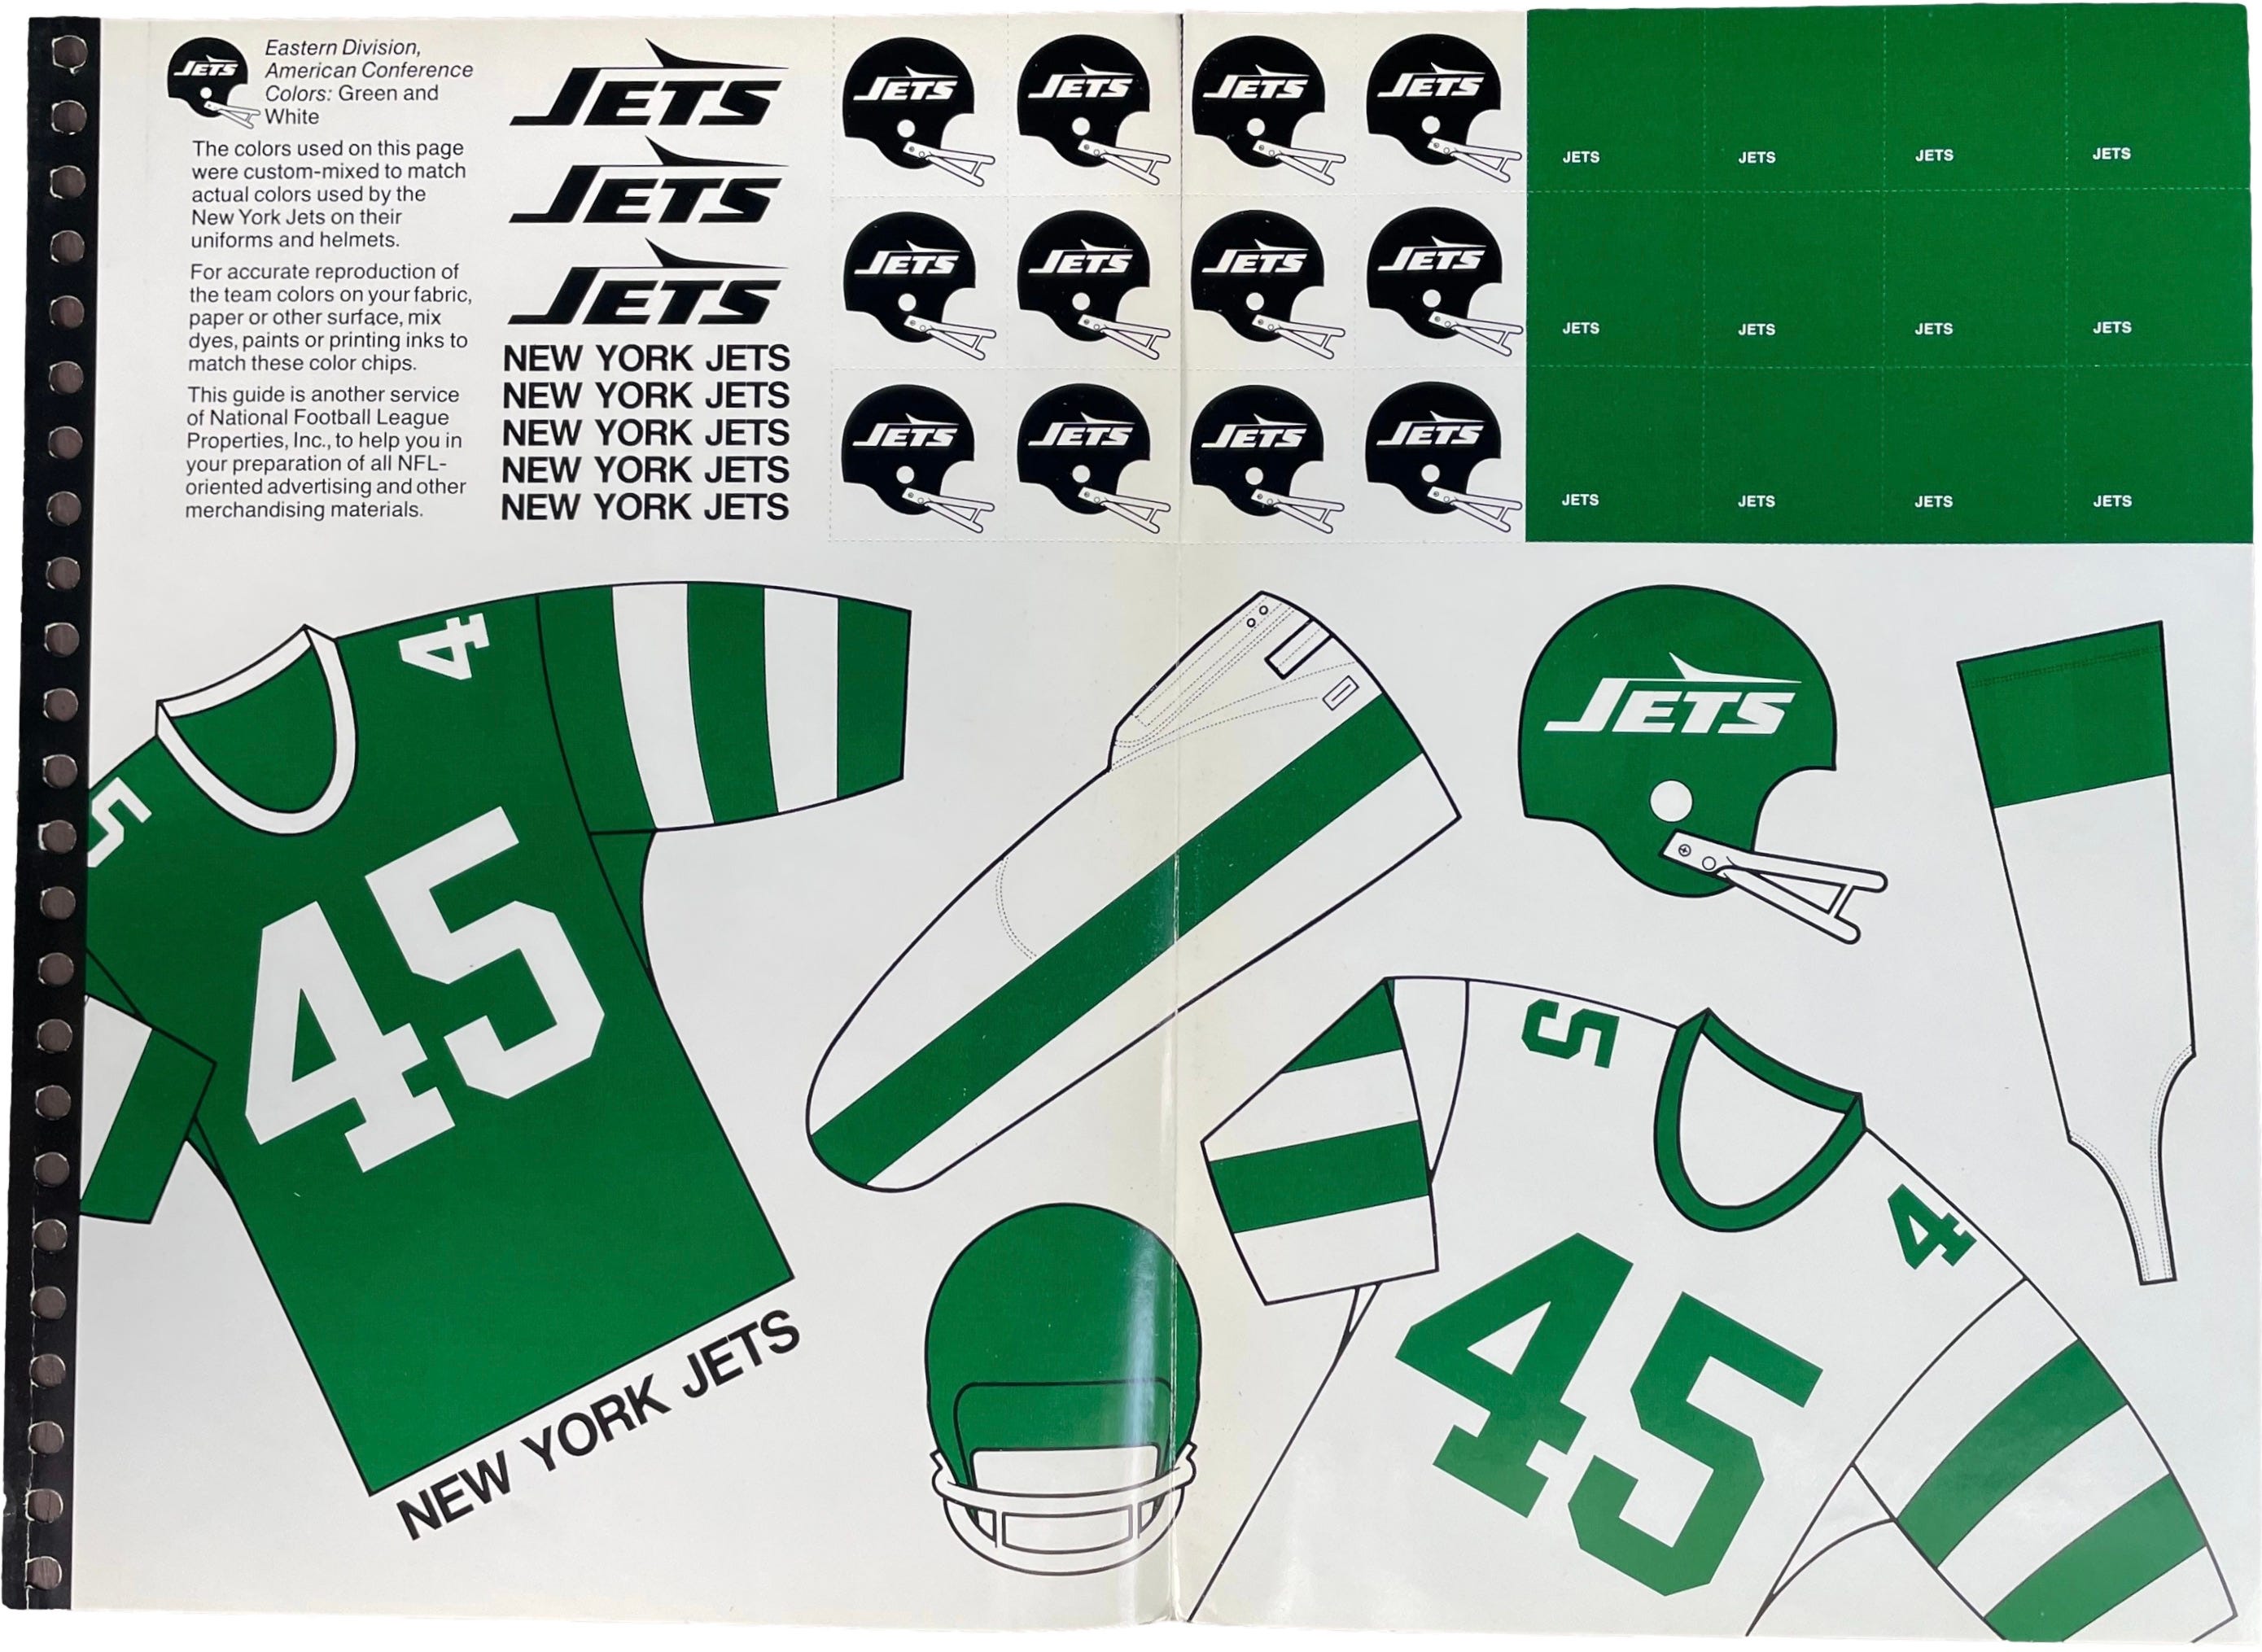 New York Jets Uniform Redesign